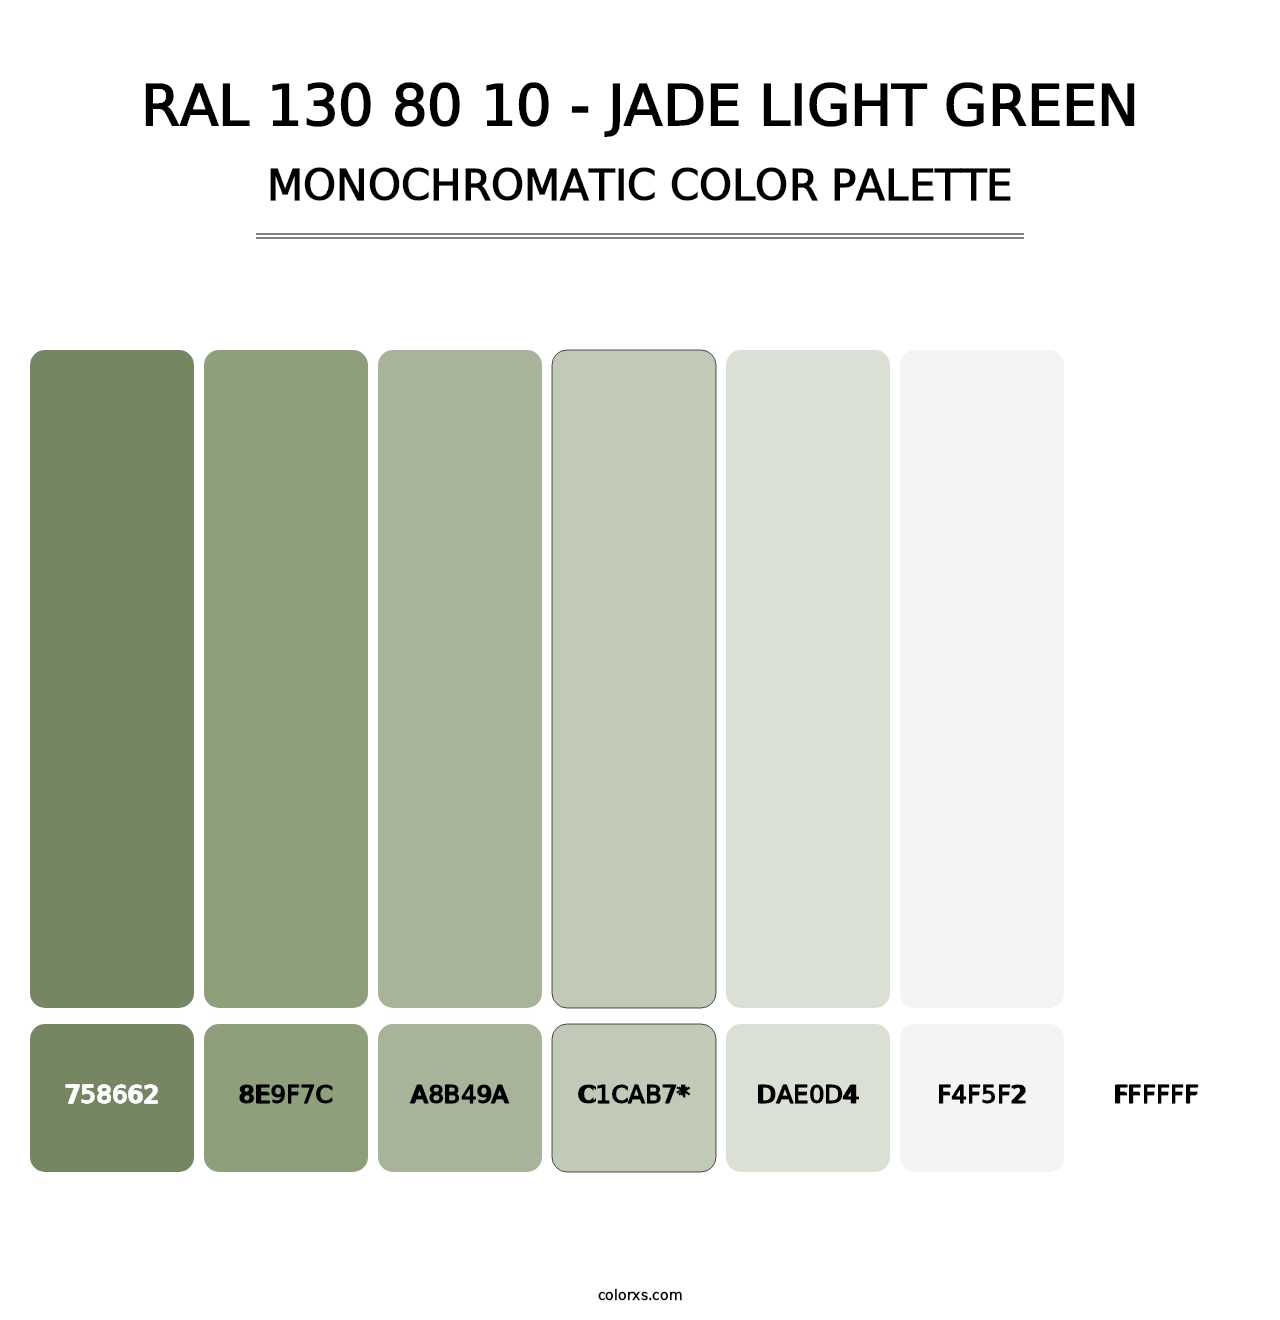 RAL 130 80 10 - Jade Light Green - Monochromatic Color Palette